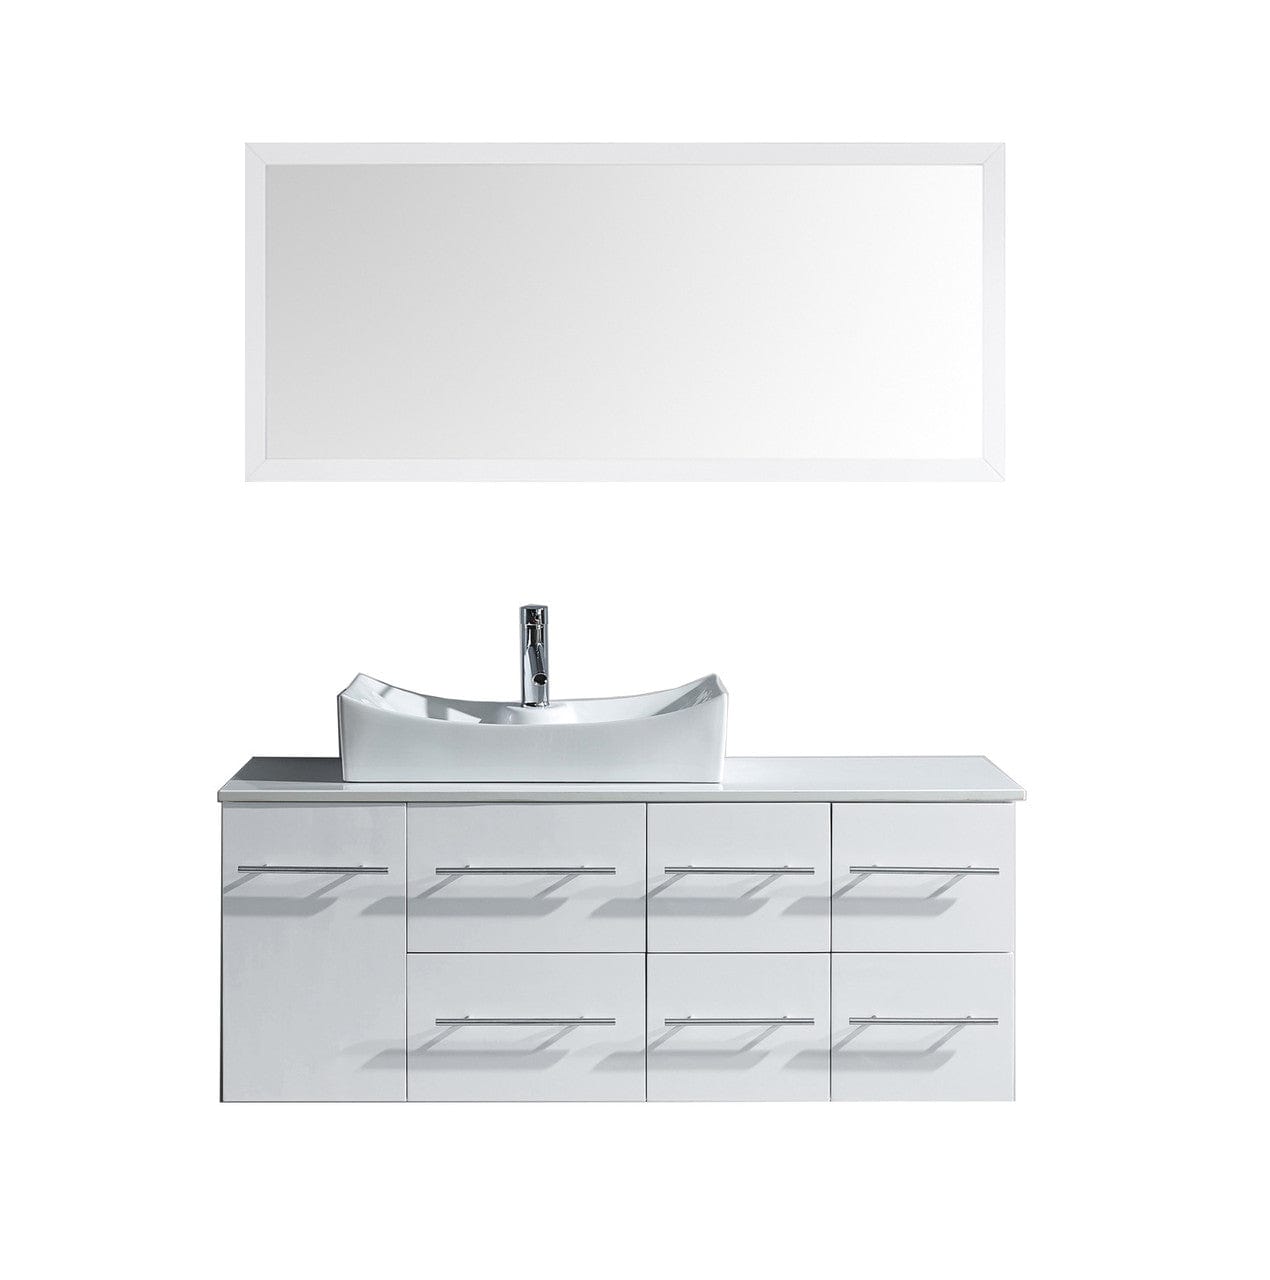 Virtu USA Ceanna 55 Single Bathroom Vanity Set in White white background